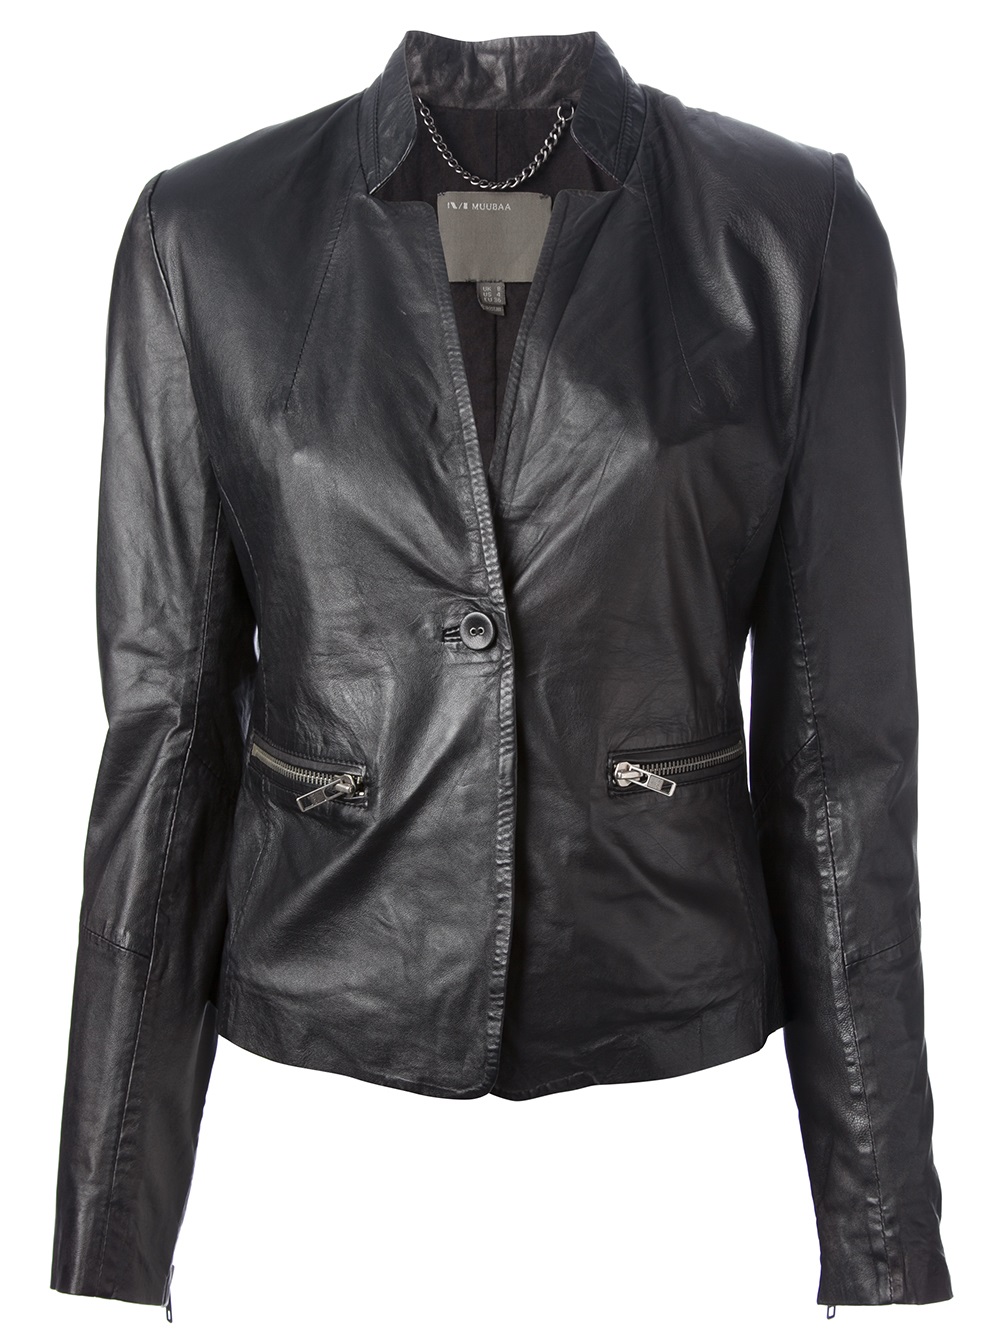 Lyst - Muubaa Muubaa Leather Jacket in Black